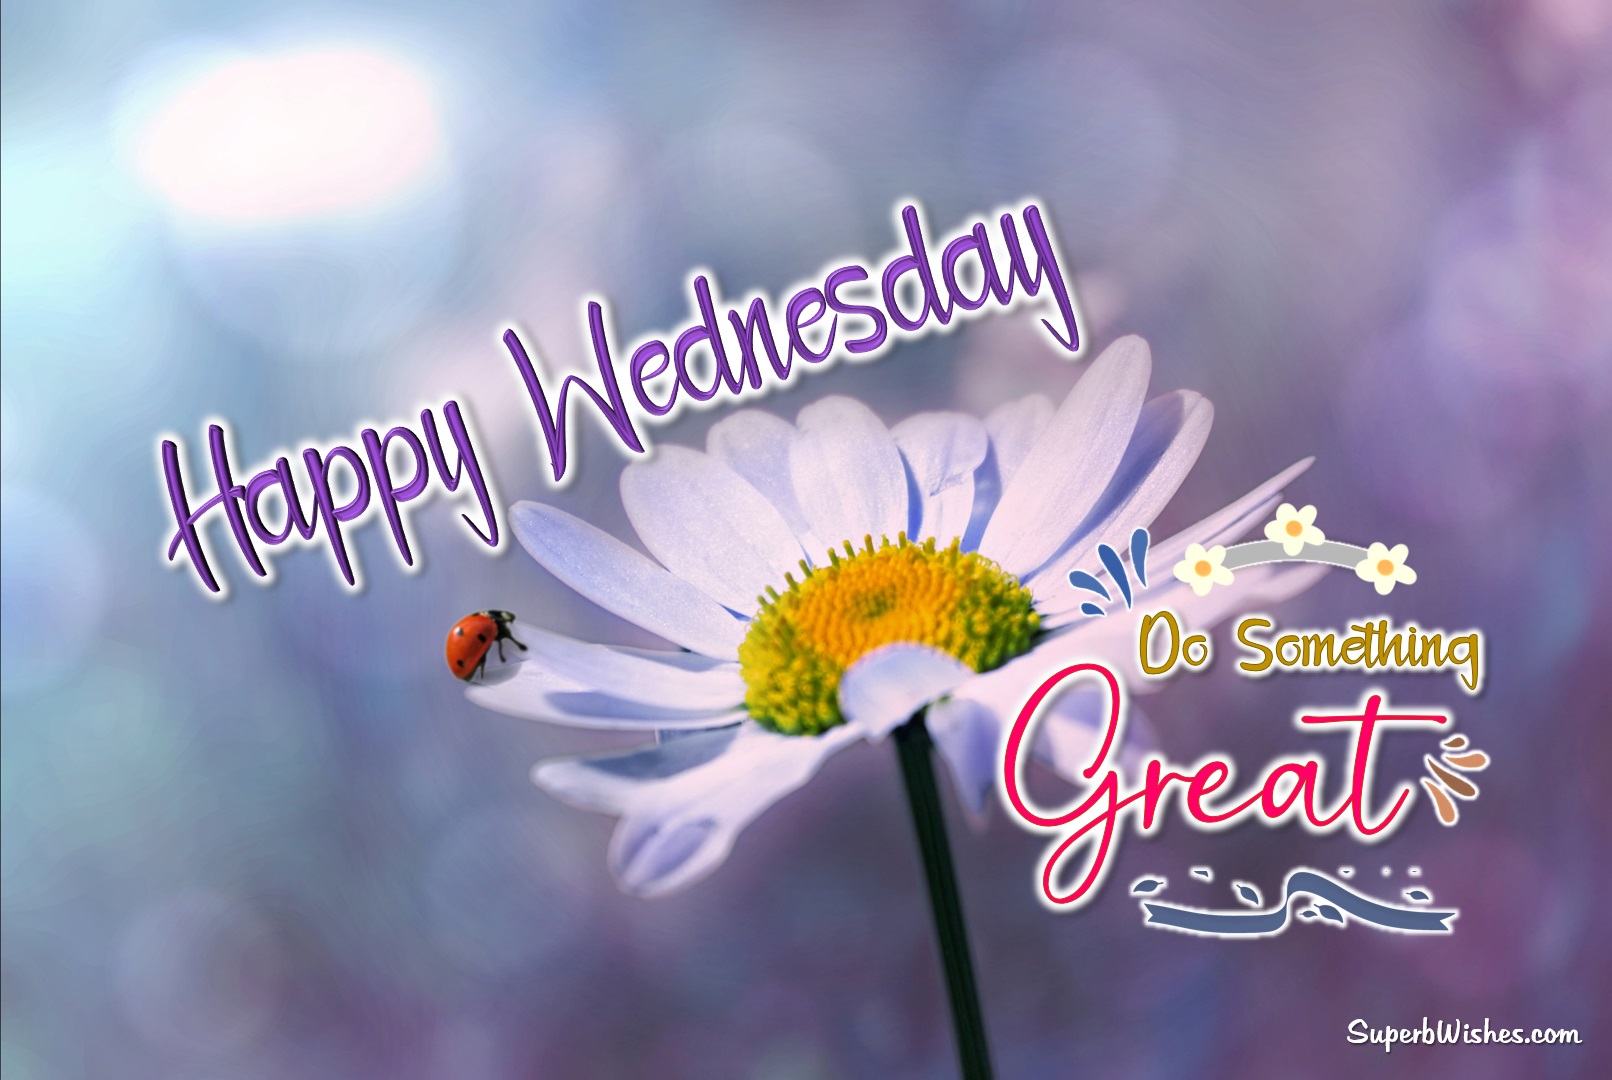 Happy Wednesday flowers. Superbwishes.com